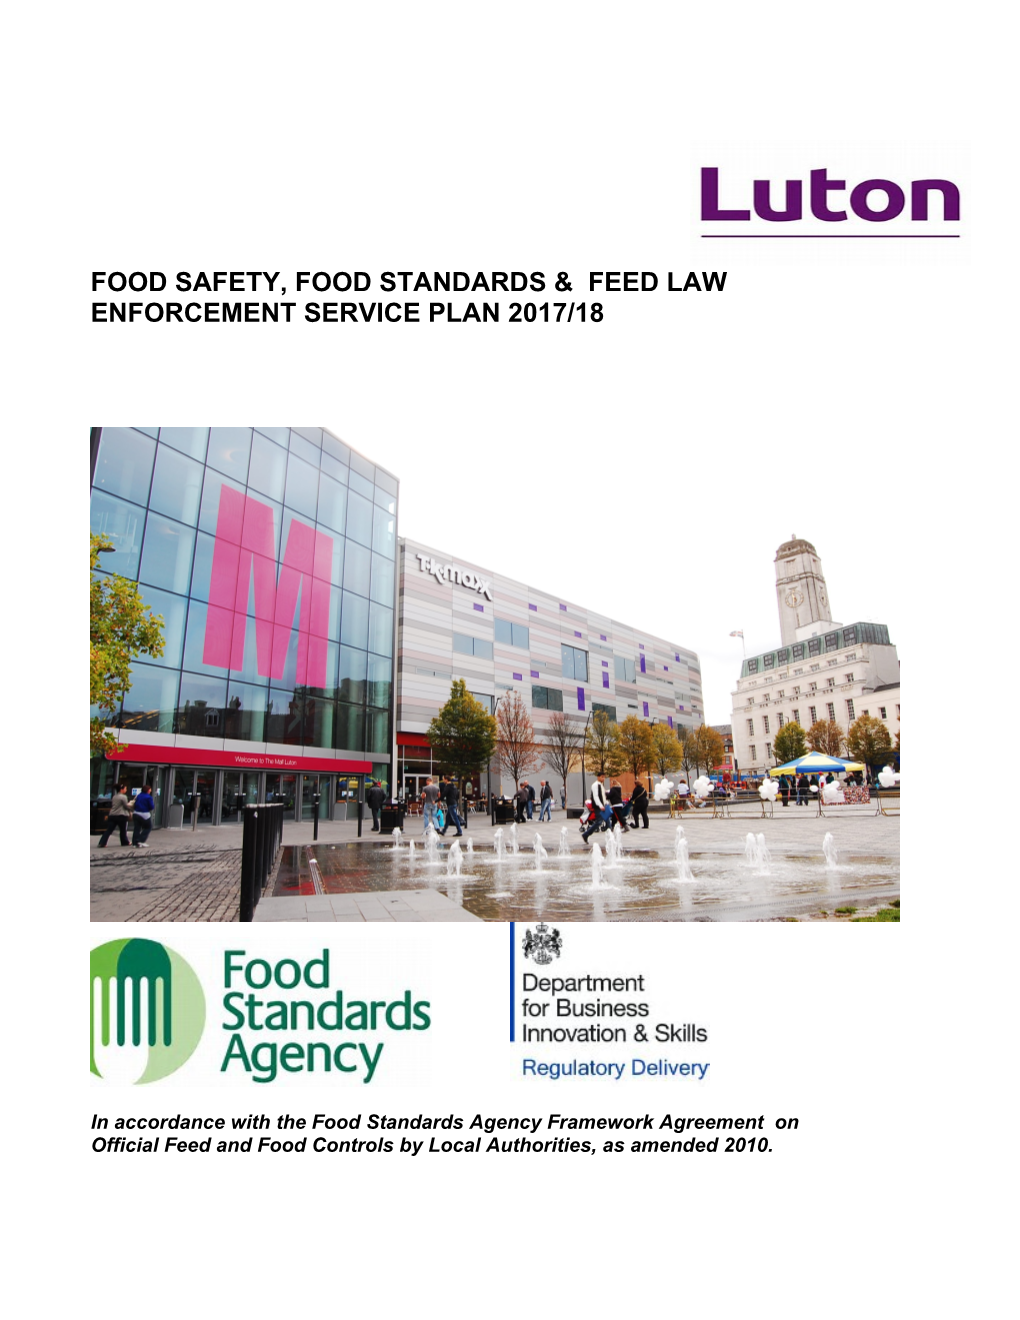 Food Law Enforcement Service Plan 2017/18